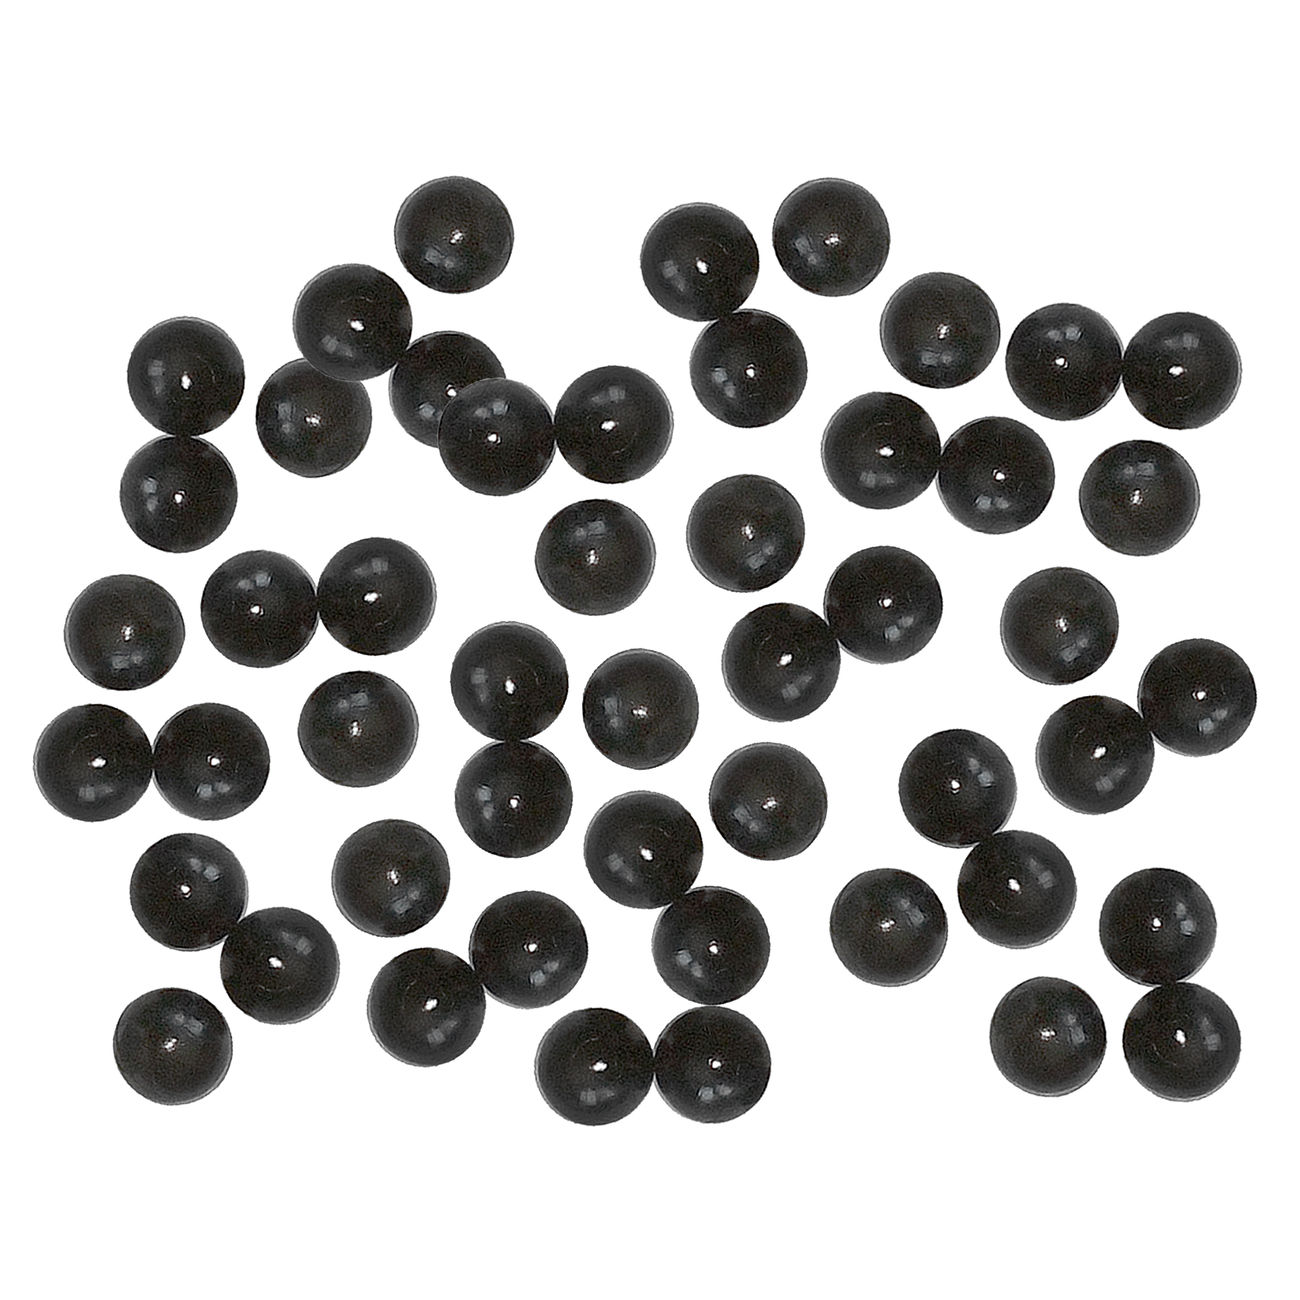 New Legion Kunststoffkugeln Nylon Balls Kaliber .43 50 Stück schwarz